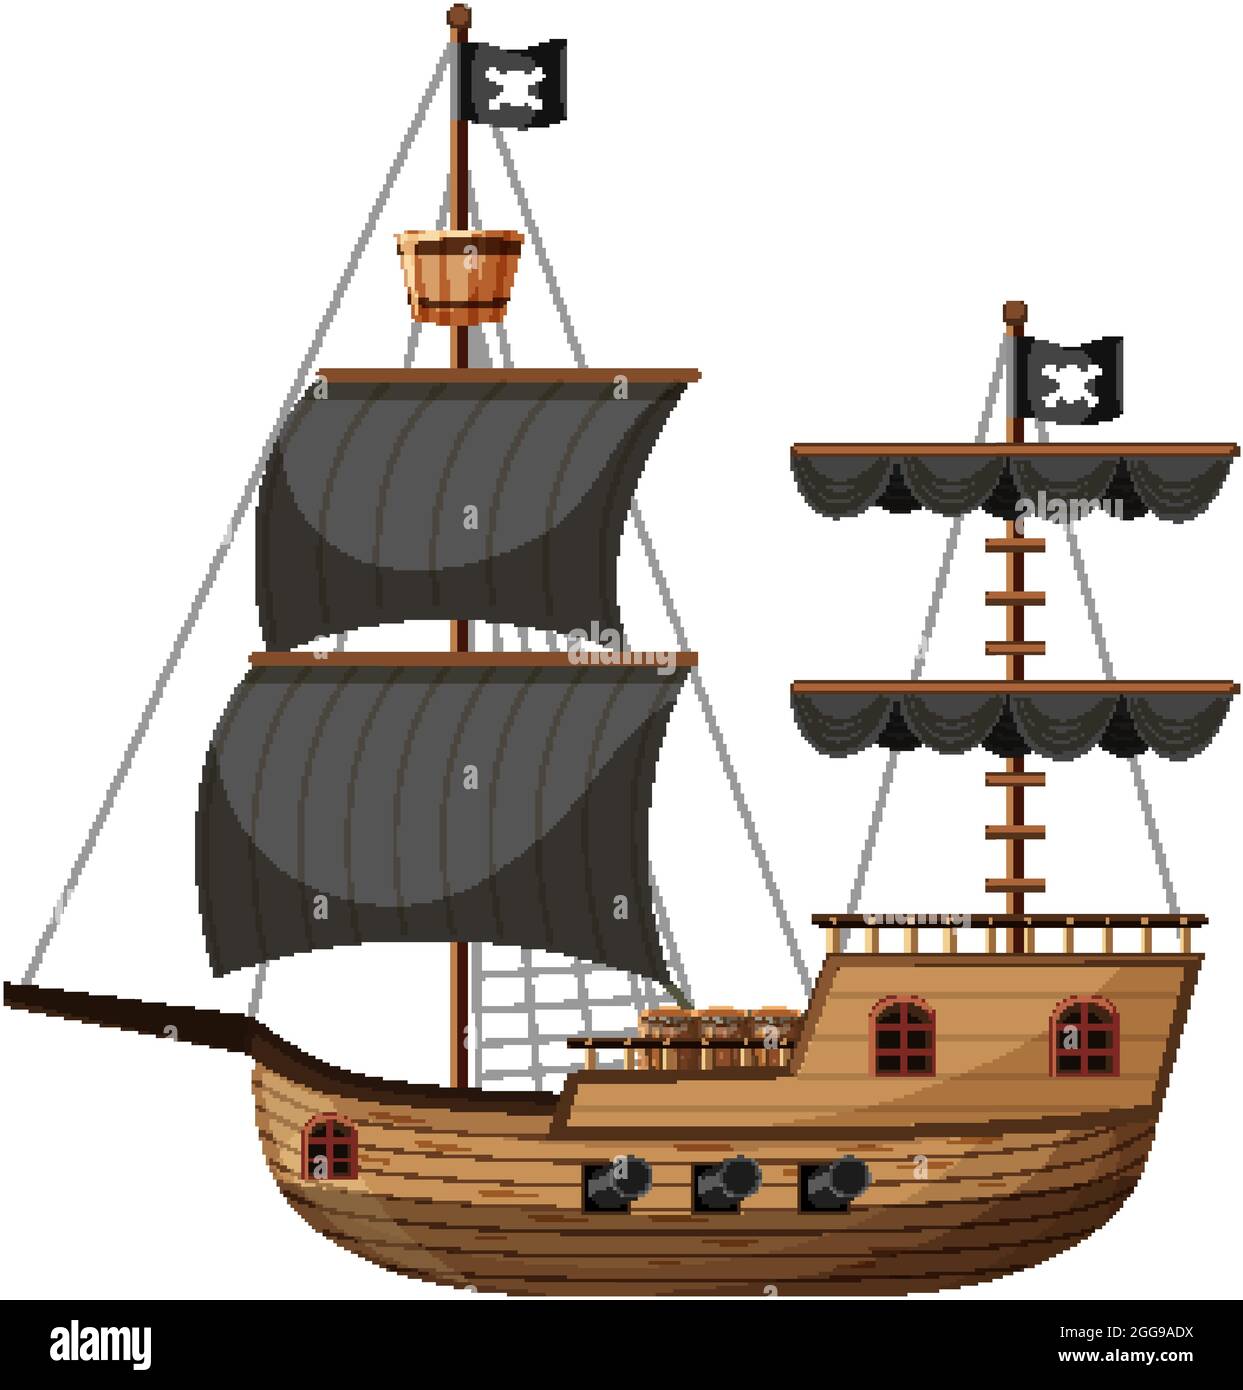 Barco pirata perla negro Imágenes vectoriales de stock - Alamy